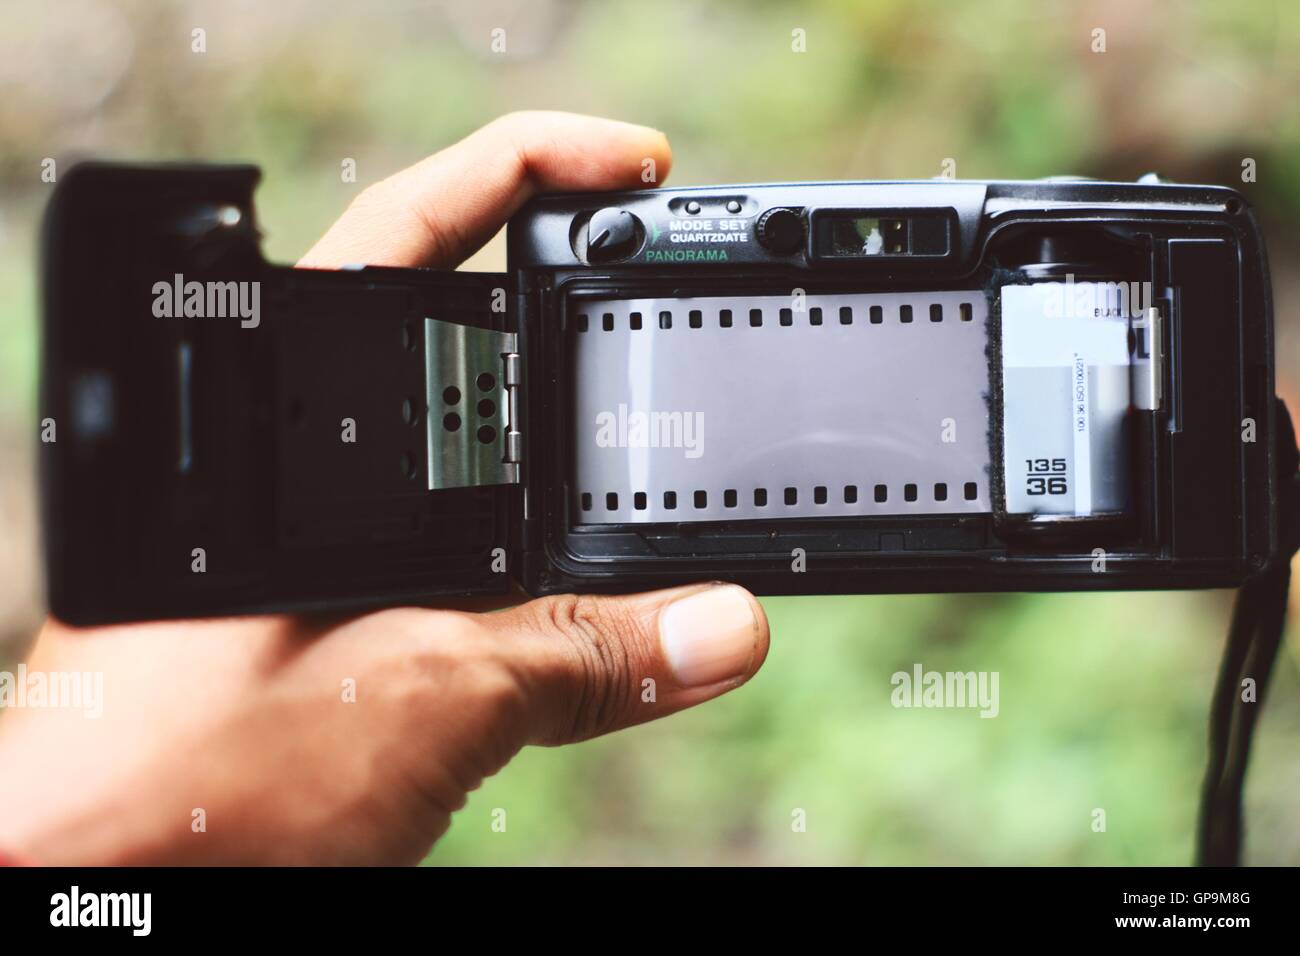 Analog pocket camera with film Stock Photo